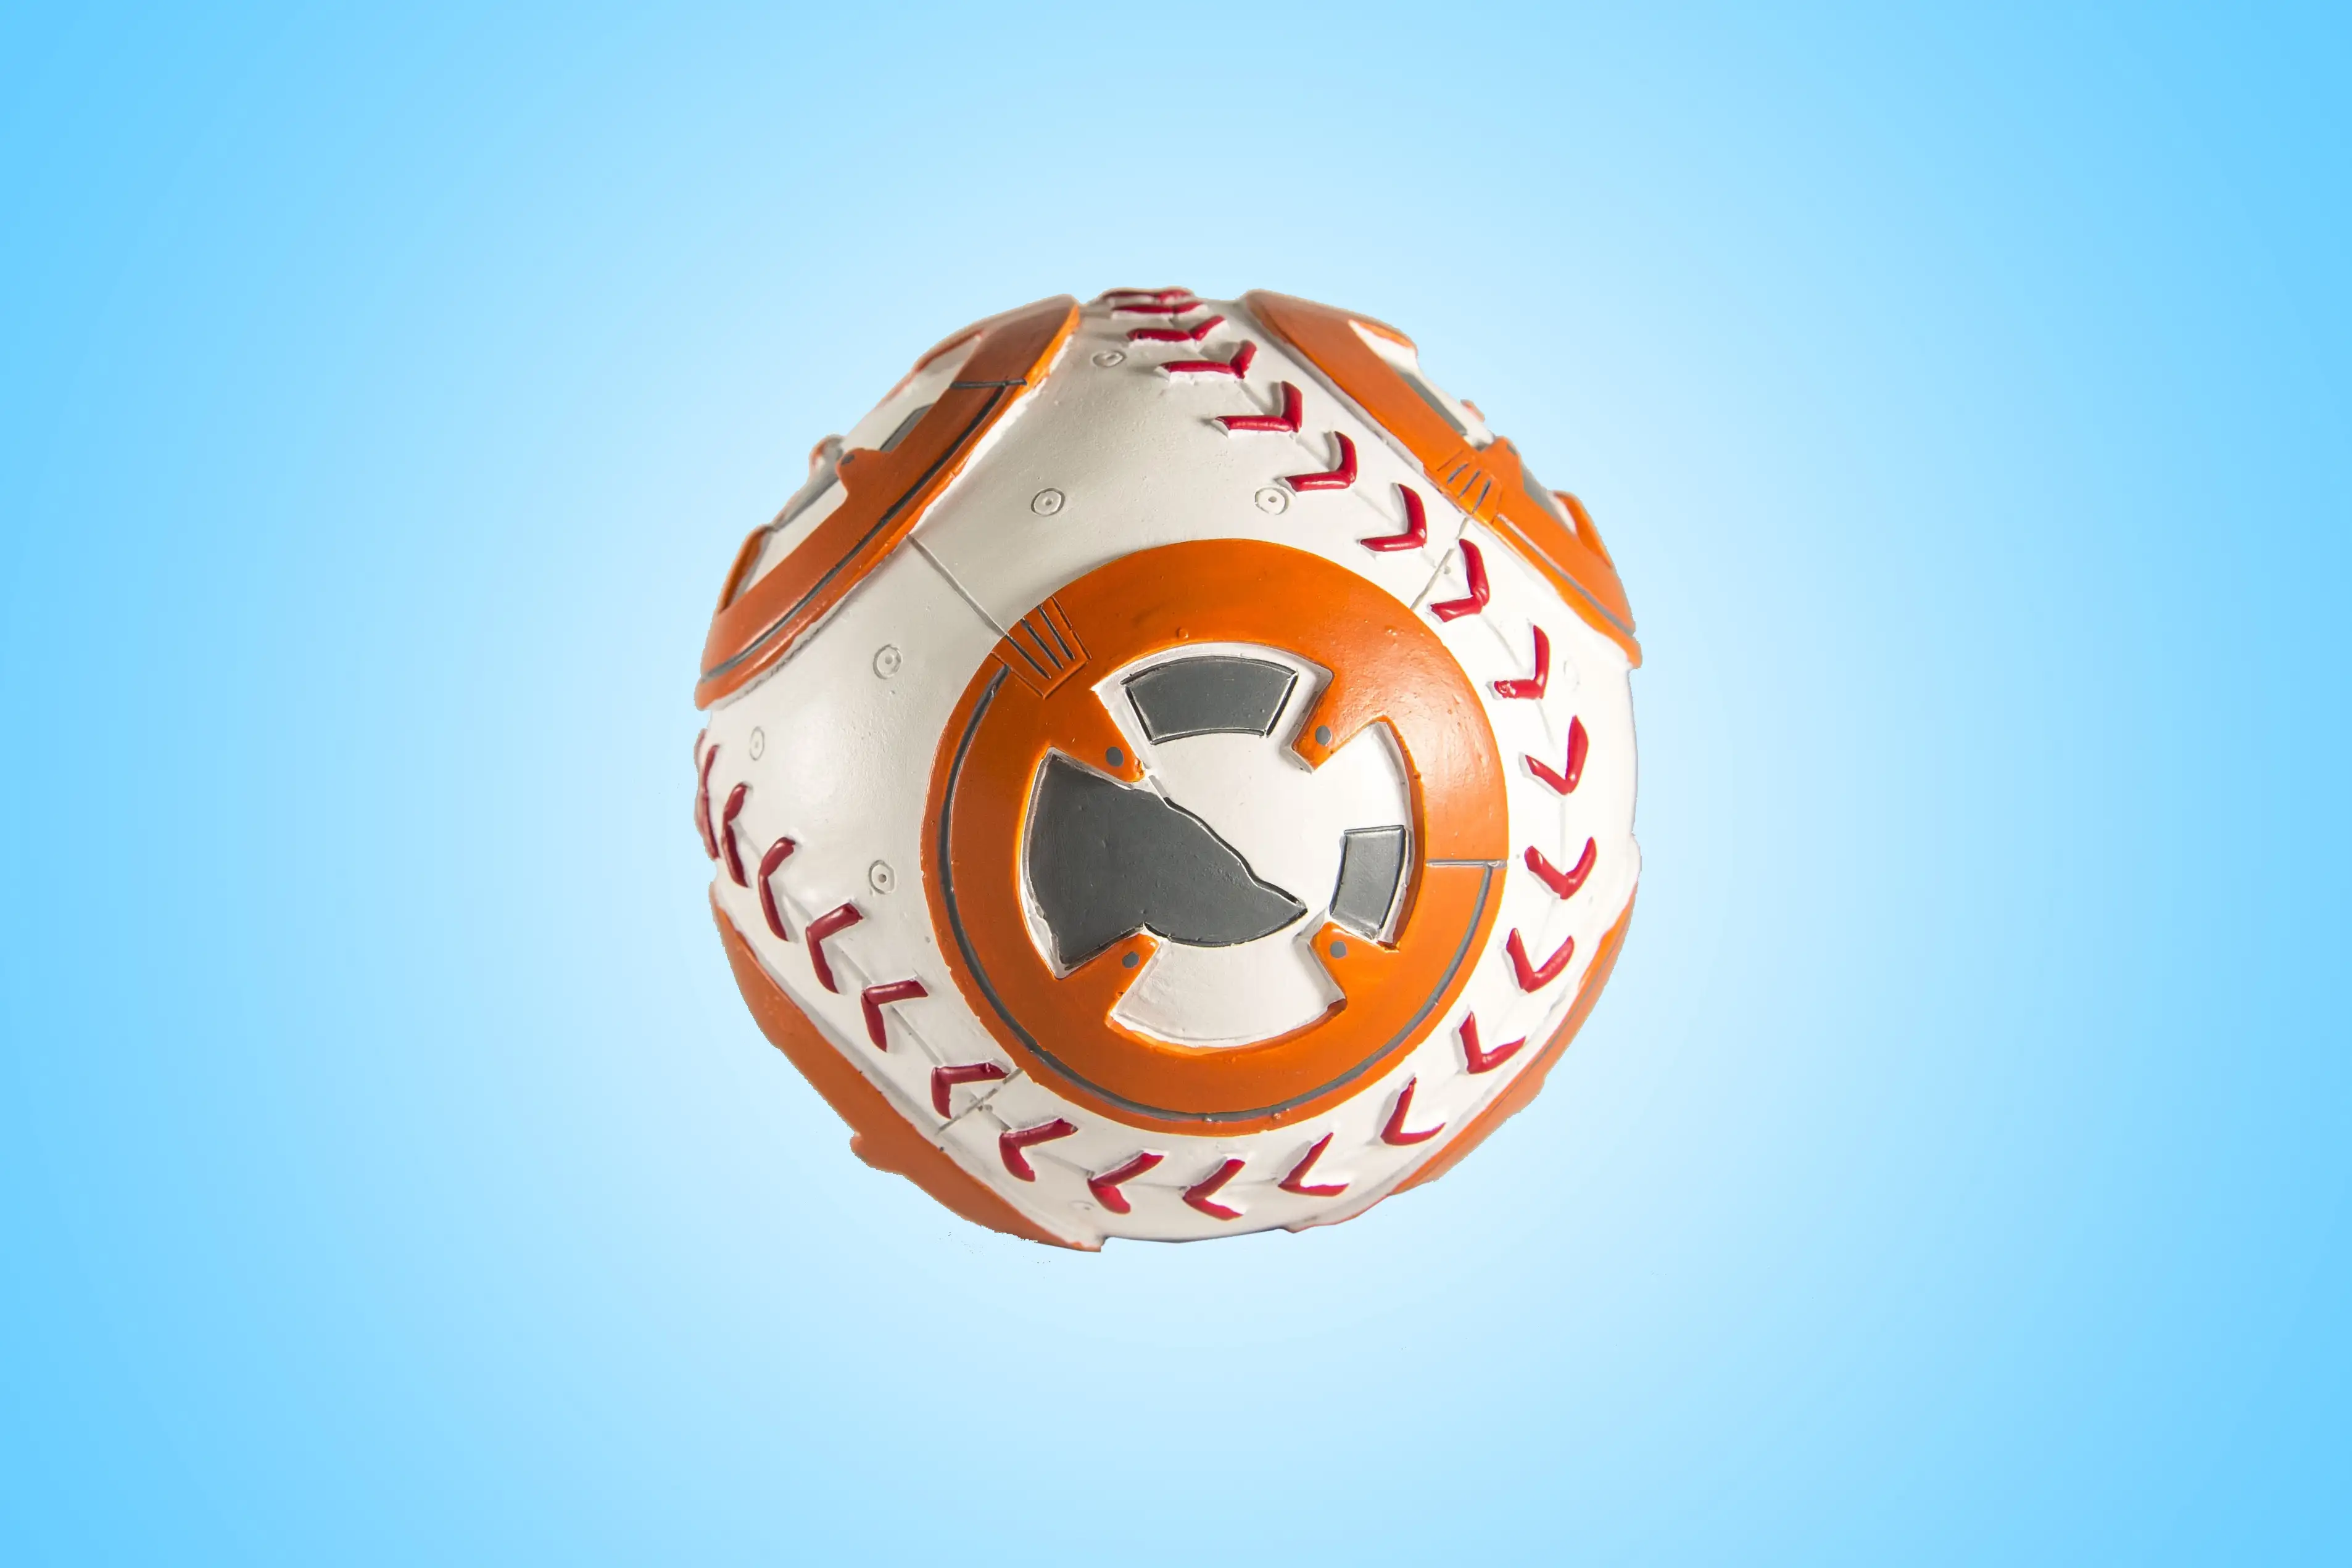 Boston Red Sox BB-8 Star Wars baseball